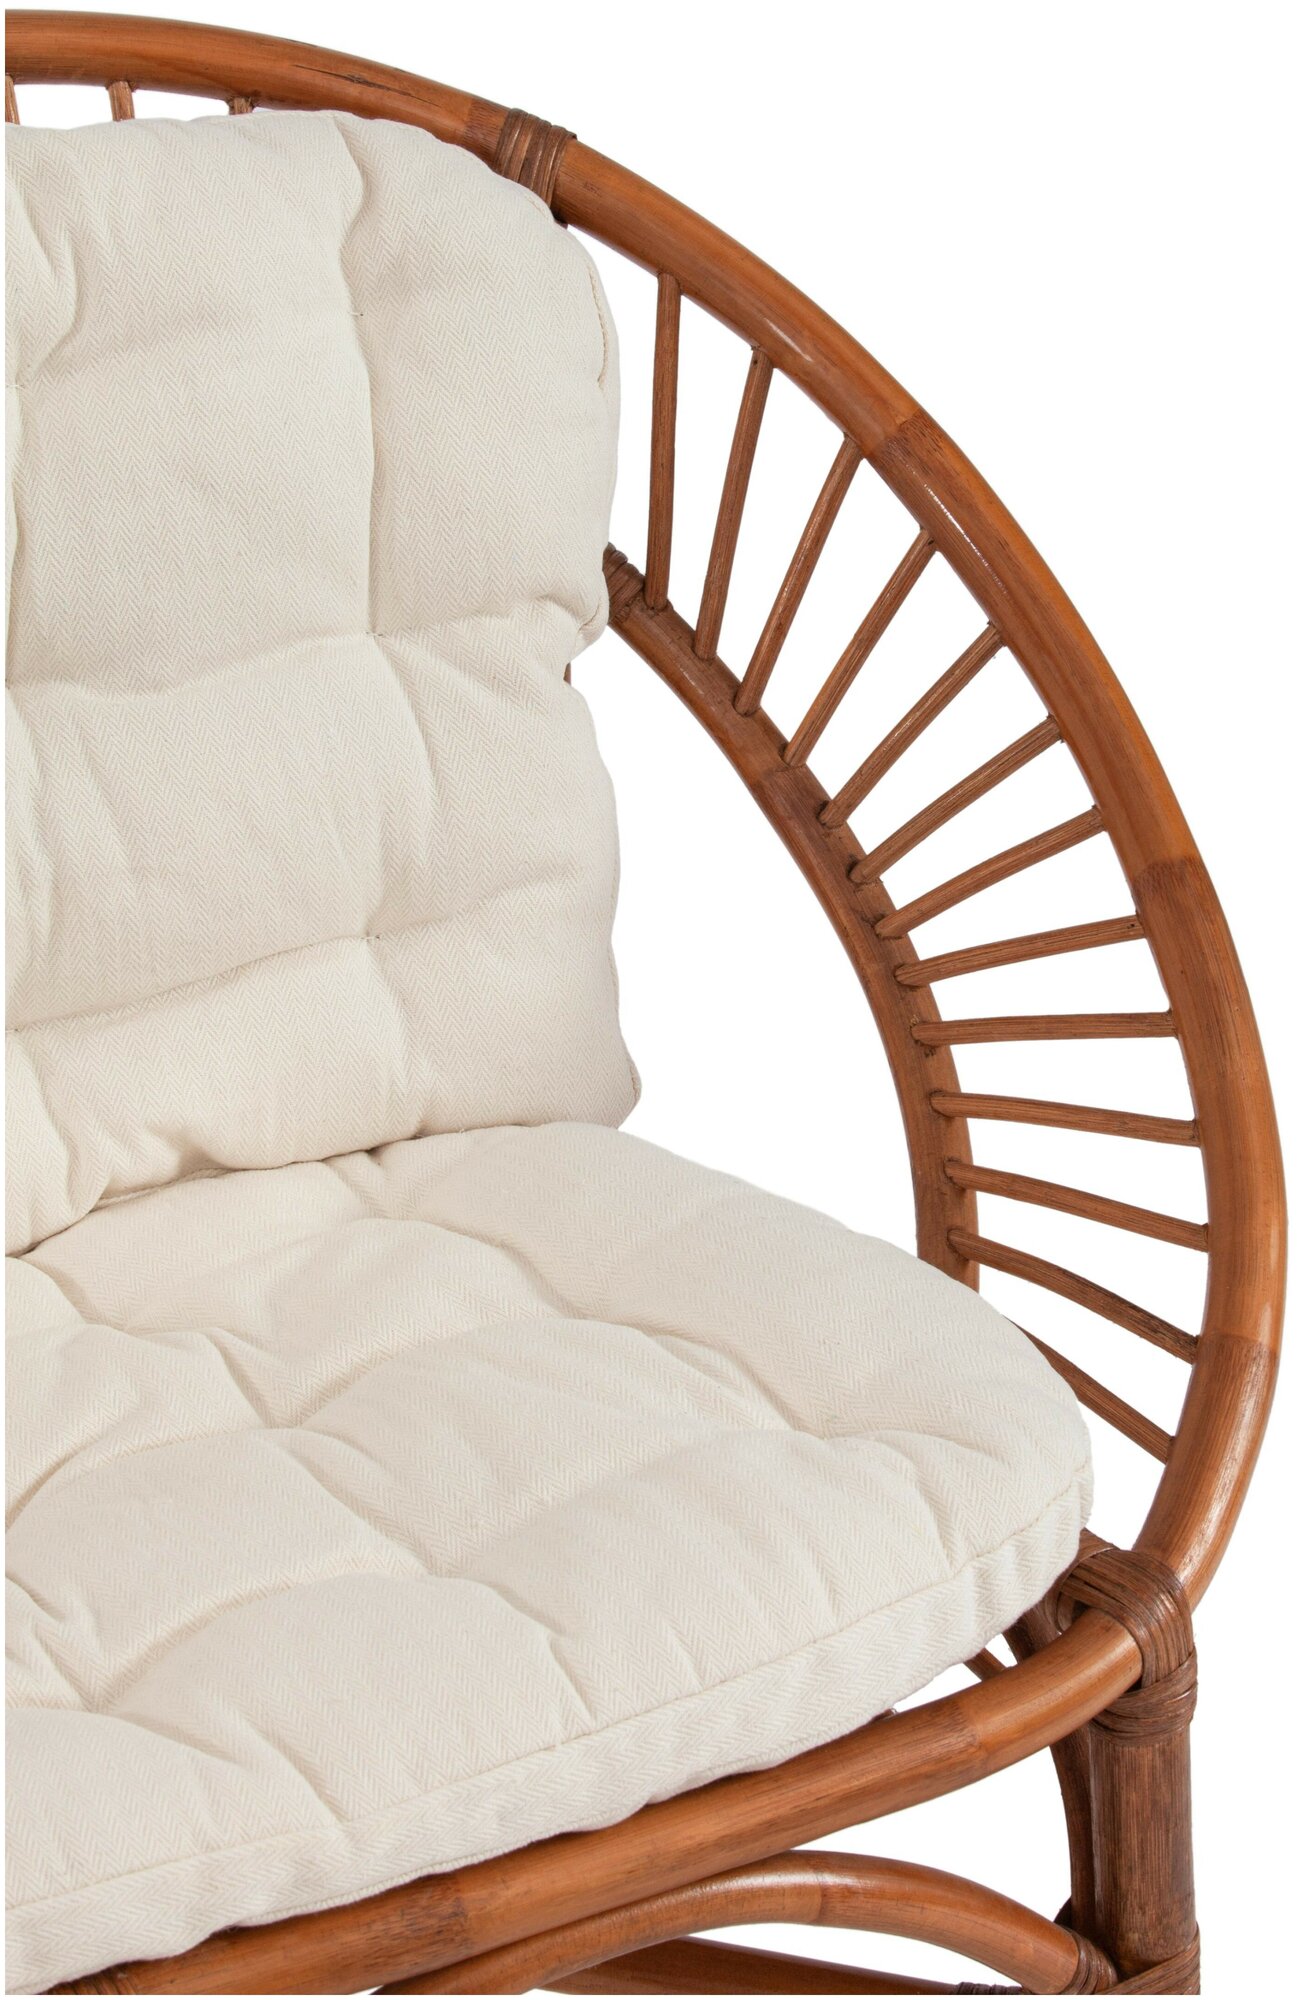 Комплект для отдыха TetChair TURKEY (стол круглый (со стеклом)+2 кресла + диван) /с подушками/ротанг, кр:70х65х78см, дв:120х65х78см, ст:D50х56,5см, coco brown (коричневый кокос) - фотография № 3